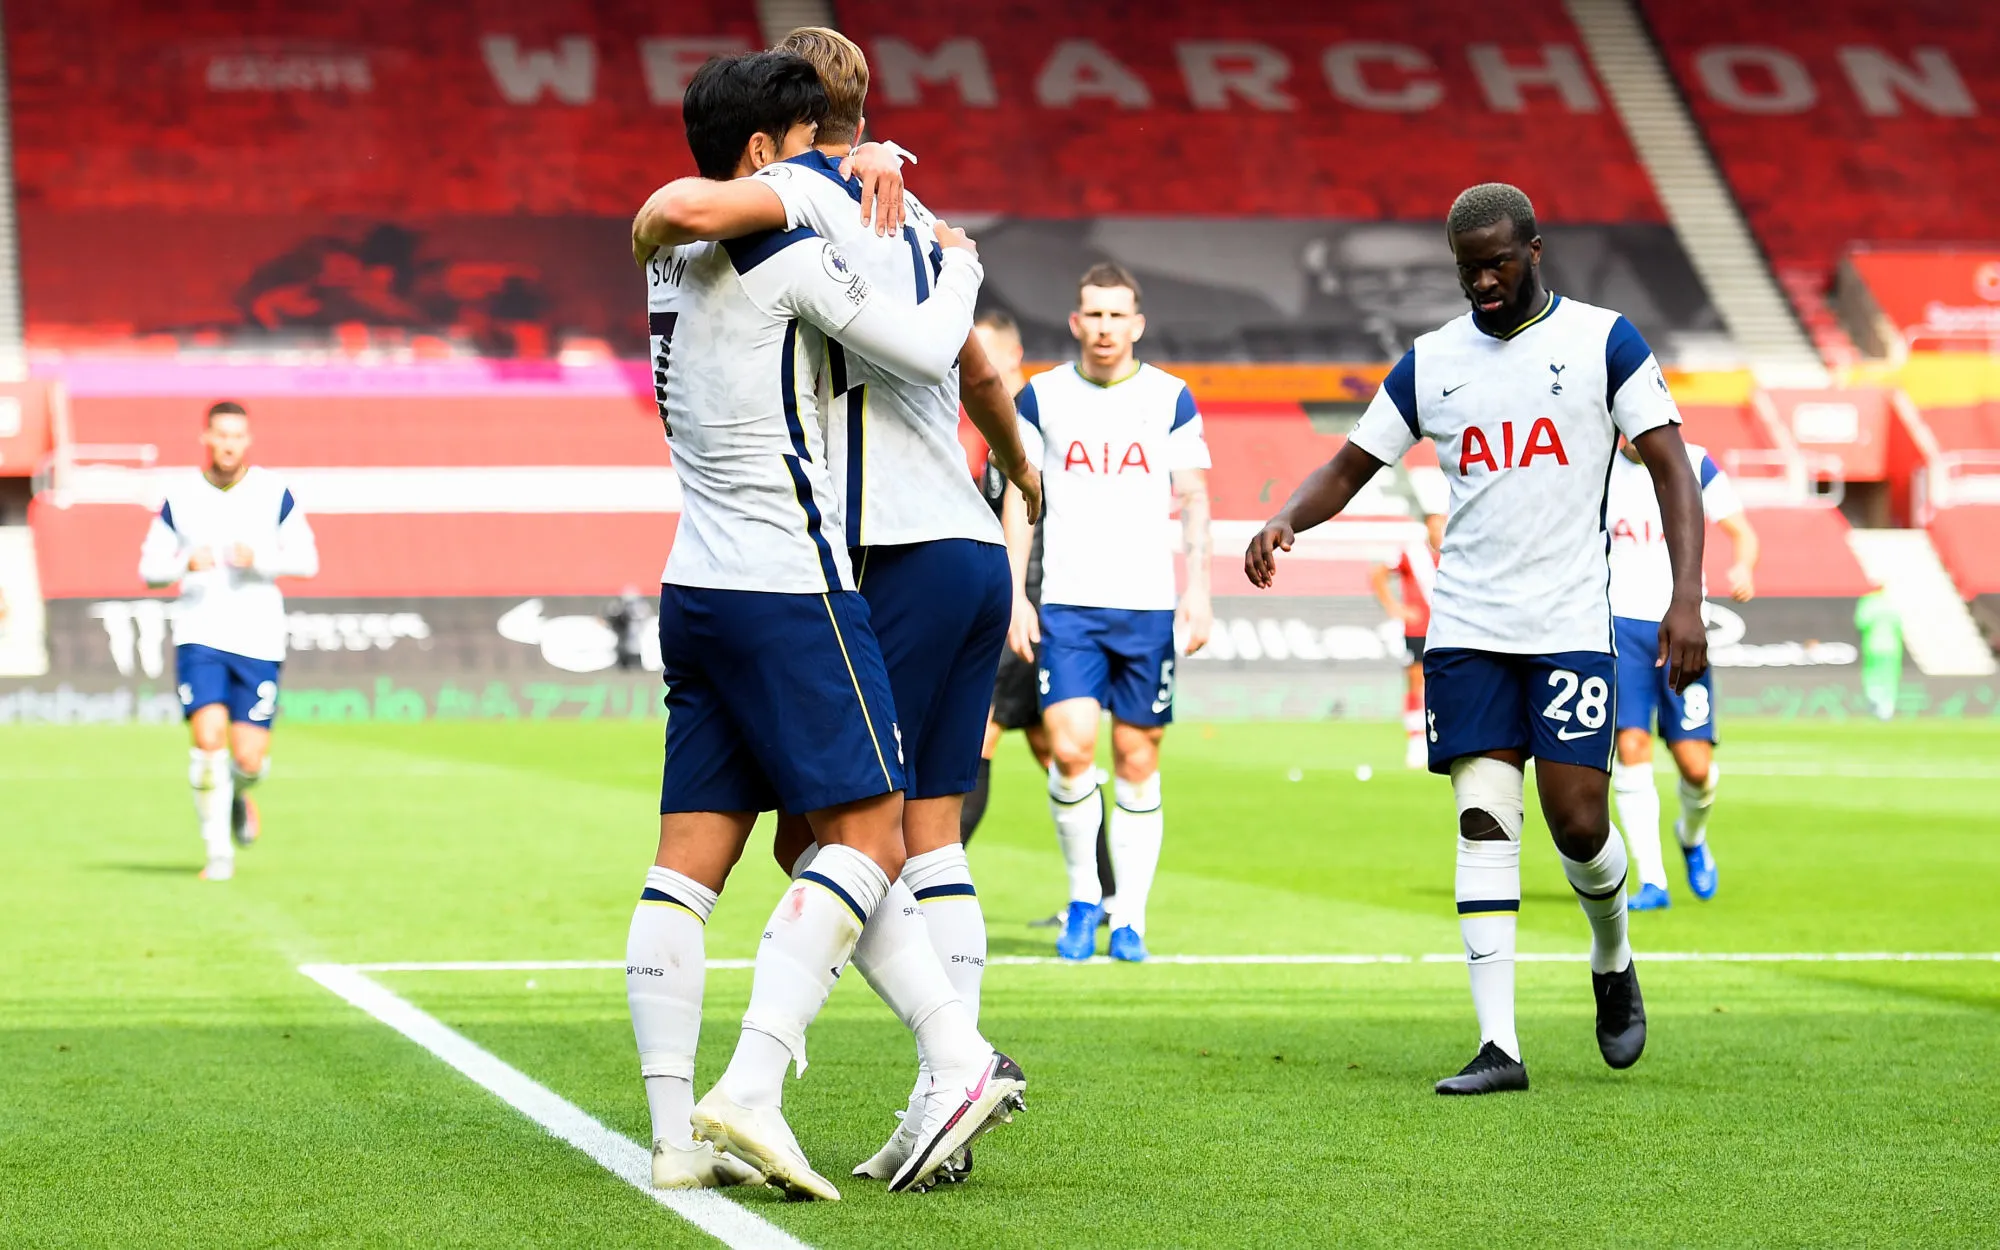 Le duo Son-Kane fait gagner Tottenham à Southampton